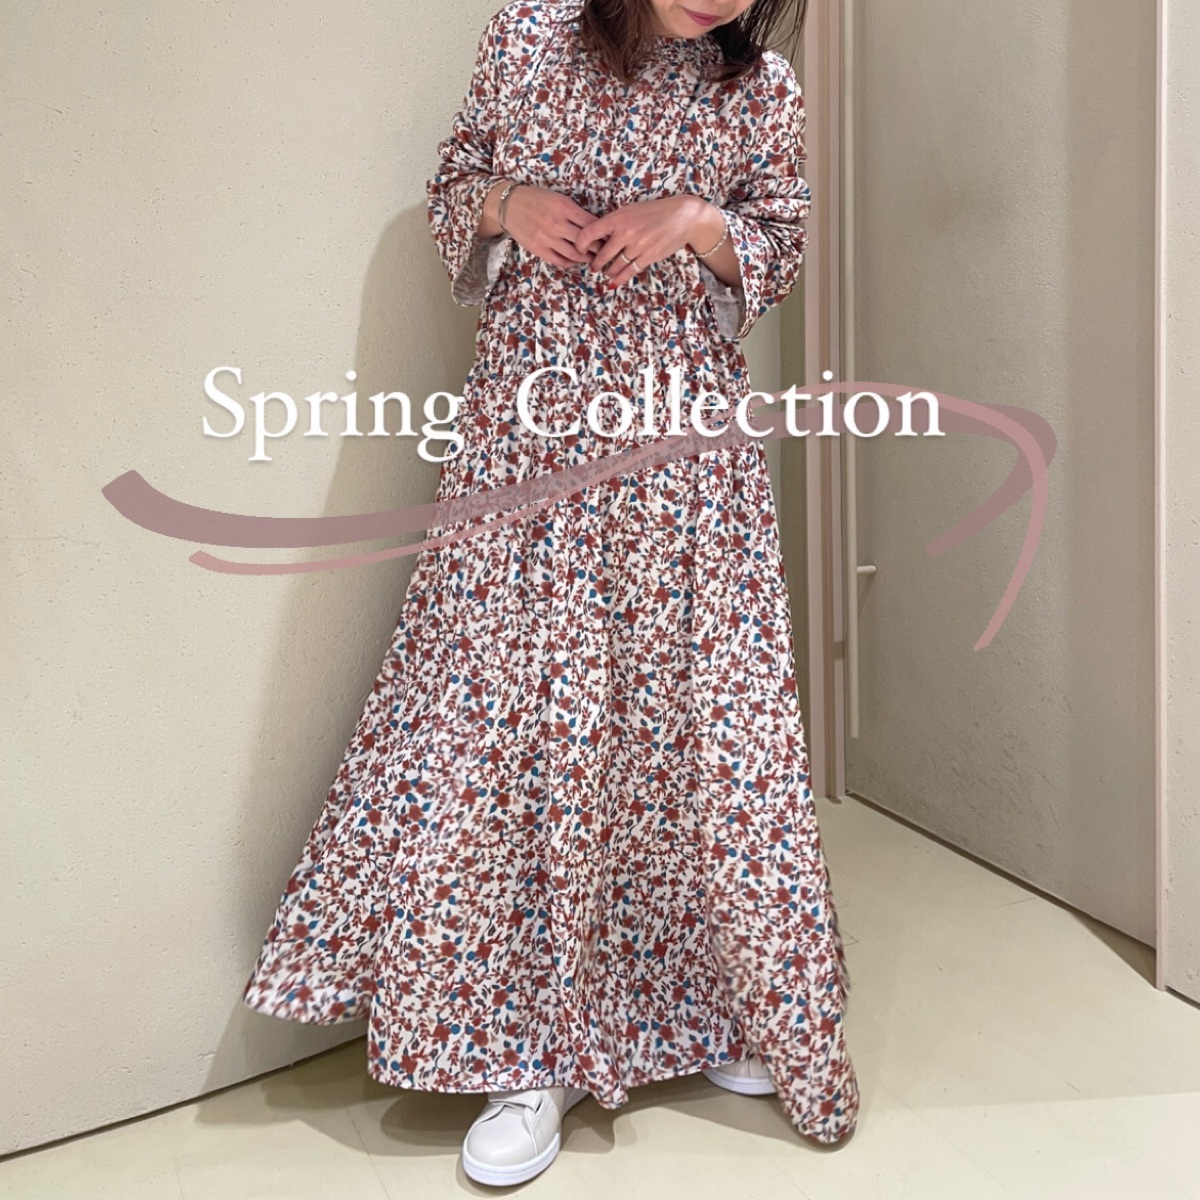 【Spring Collection】春服の準備